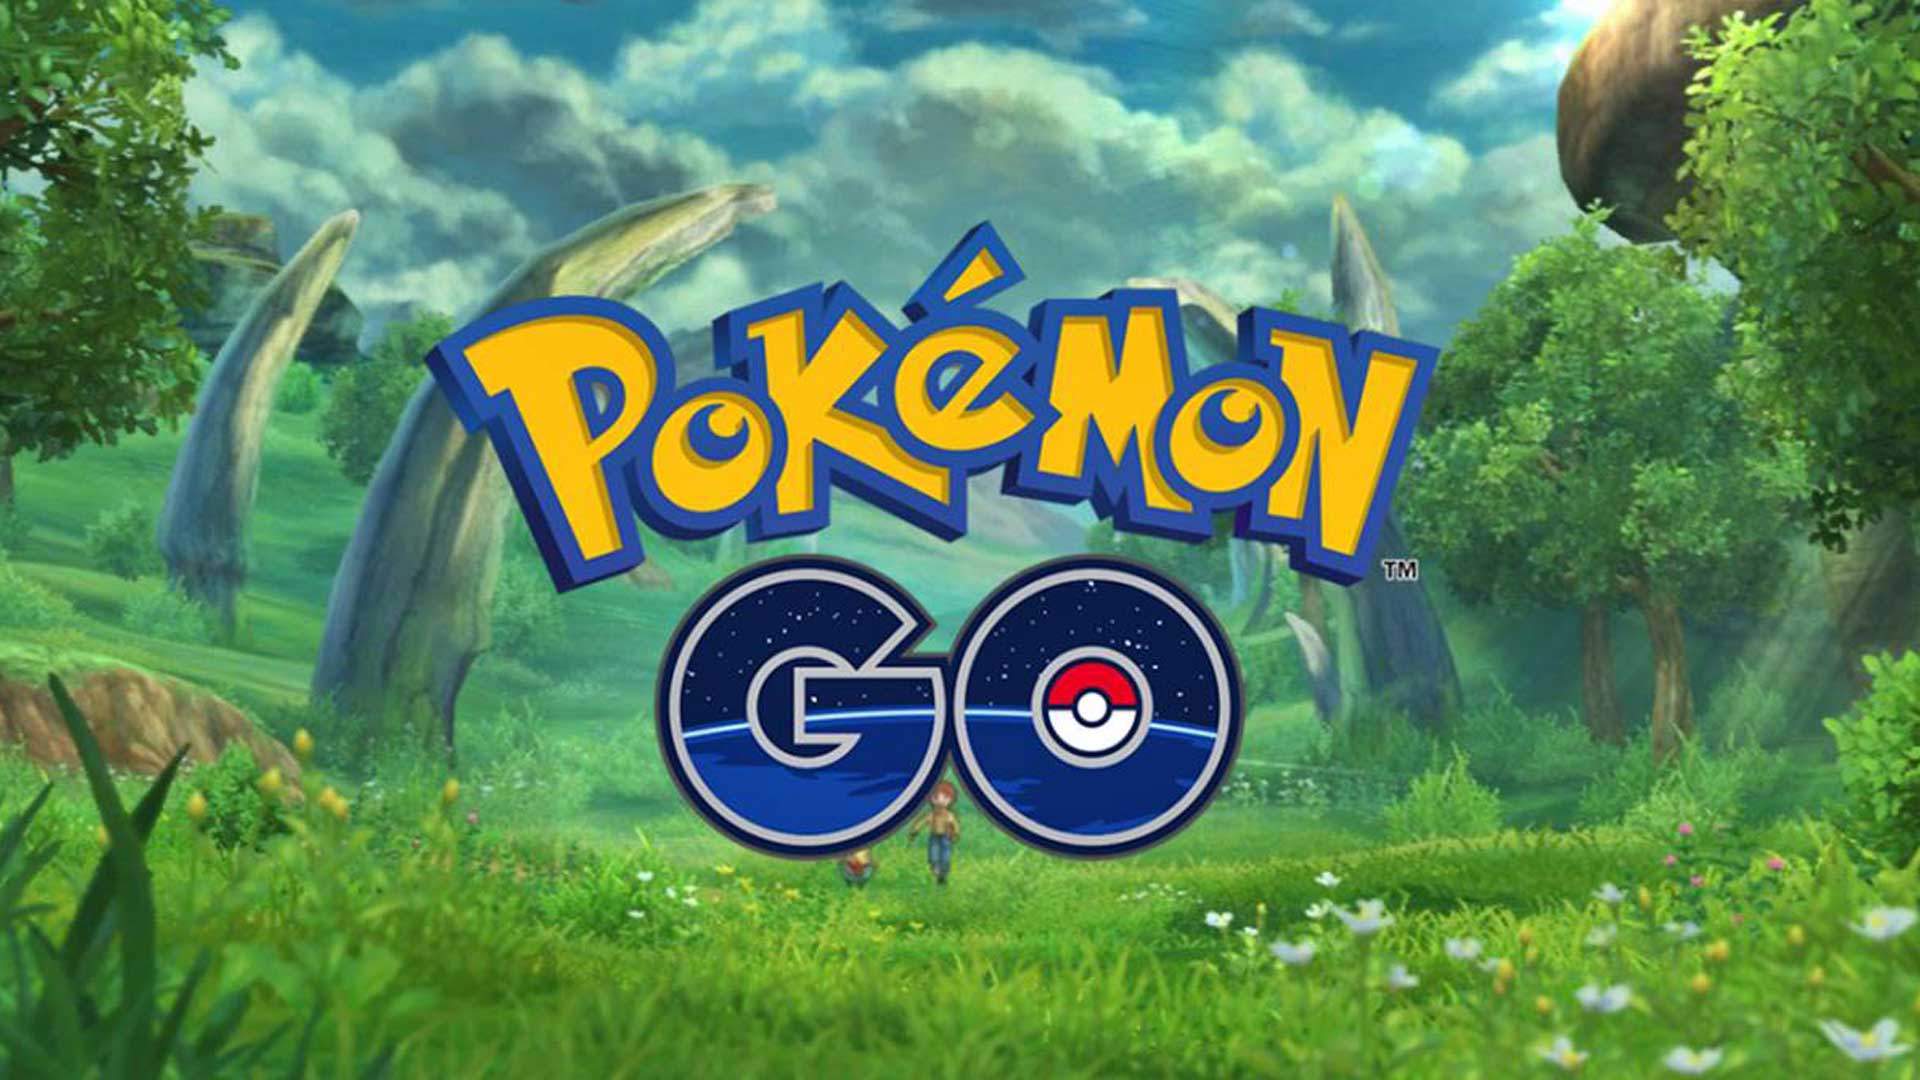 Pokémon GO at McKendree